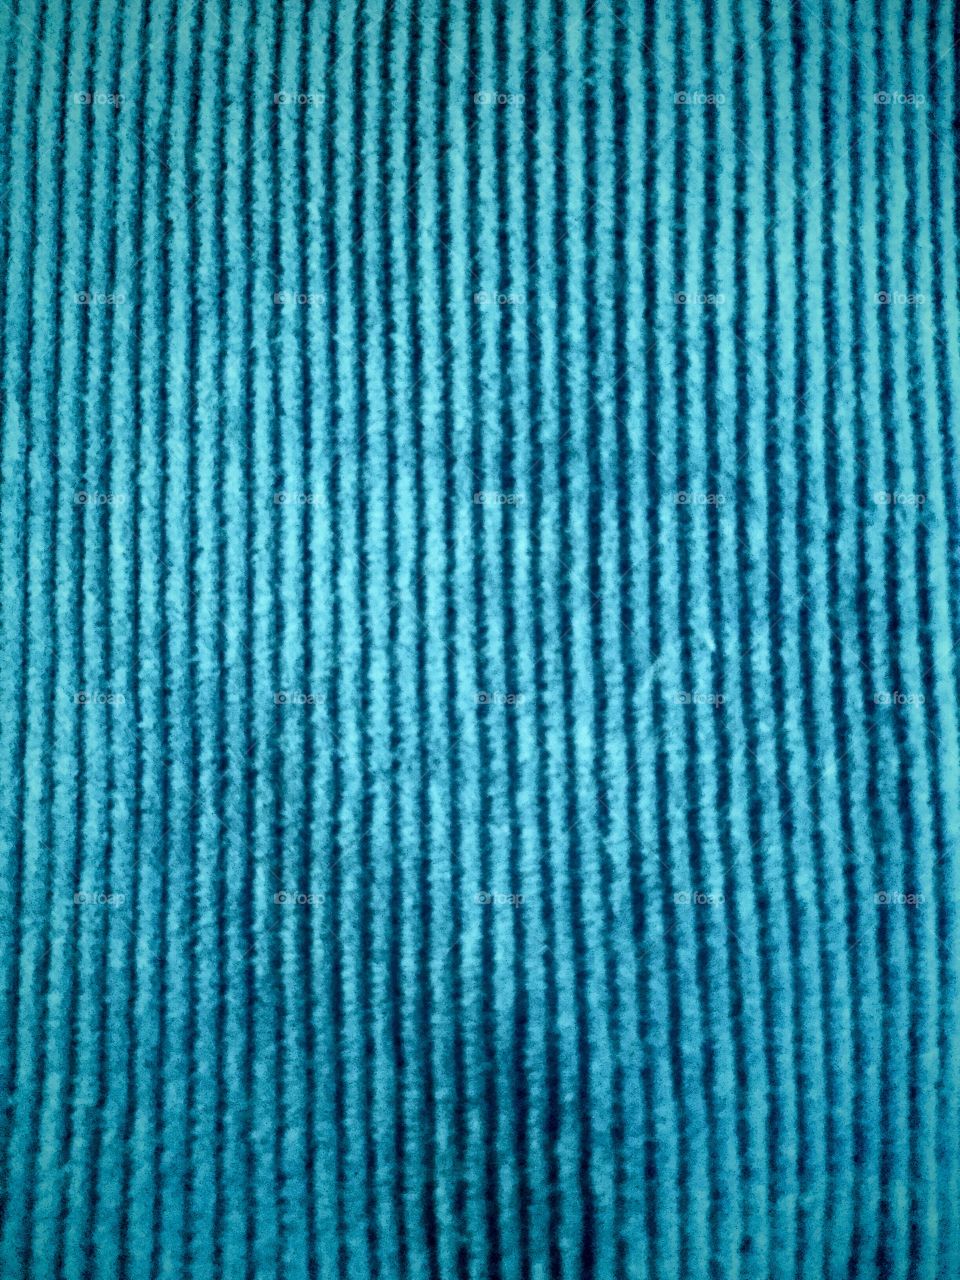 Close-up of corduroy fabric